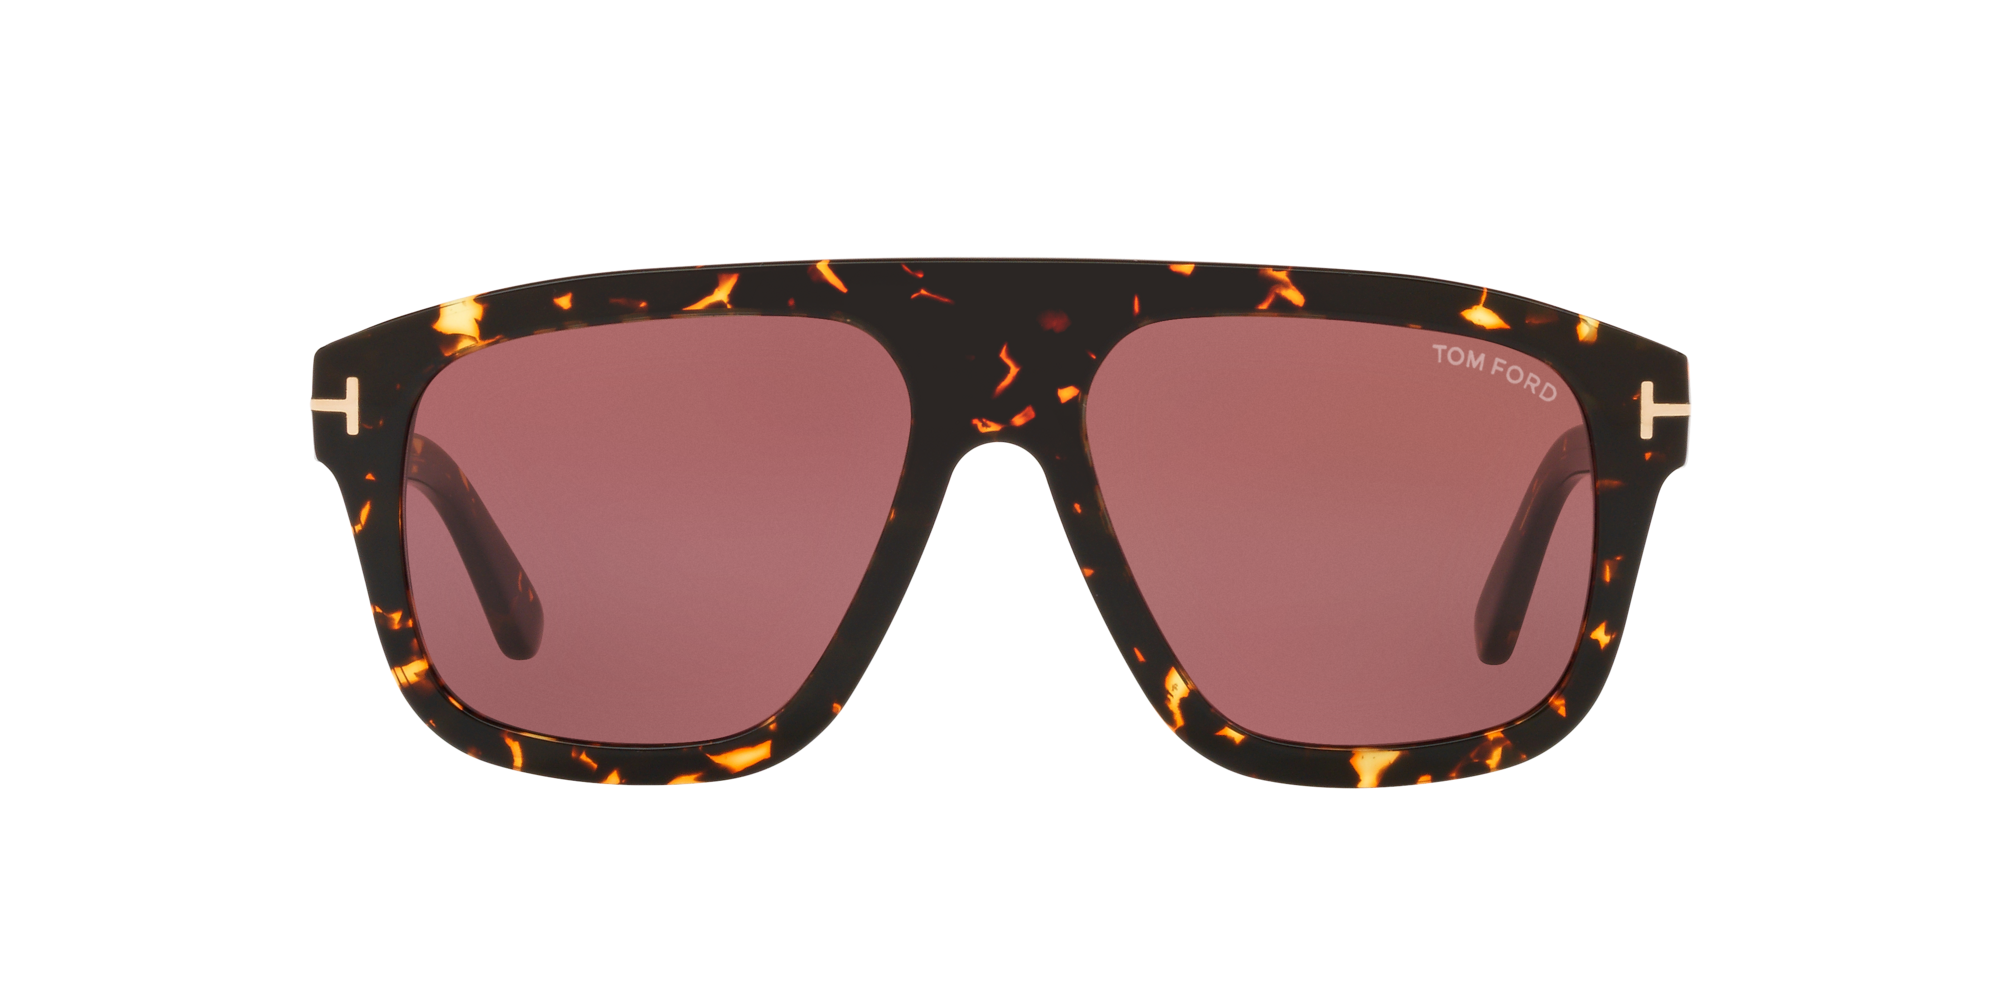 Tom Ford - Double Clip On Optical Glasses - Butterfly Optical Glasses - Red  - FT5641-B - Optical Glasses - Tom Ford Eyewear - Avvenice